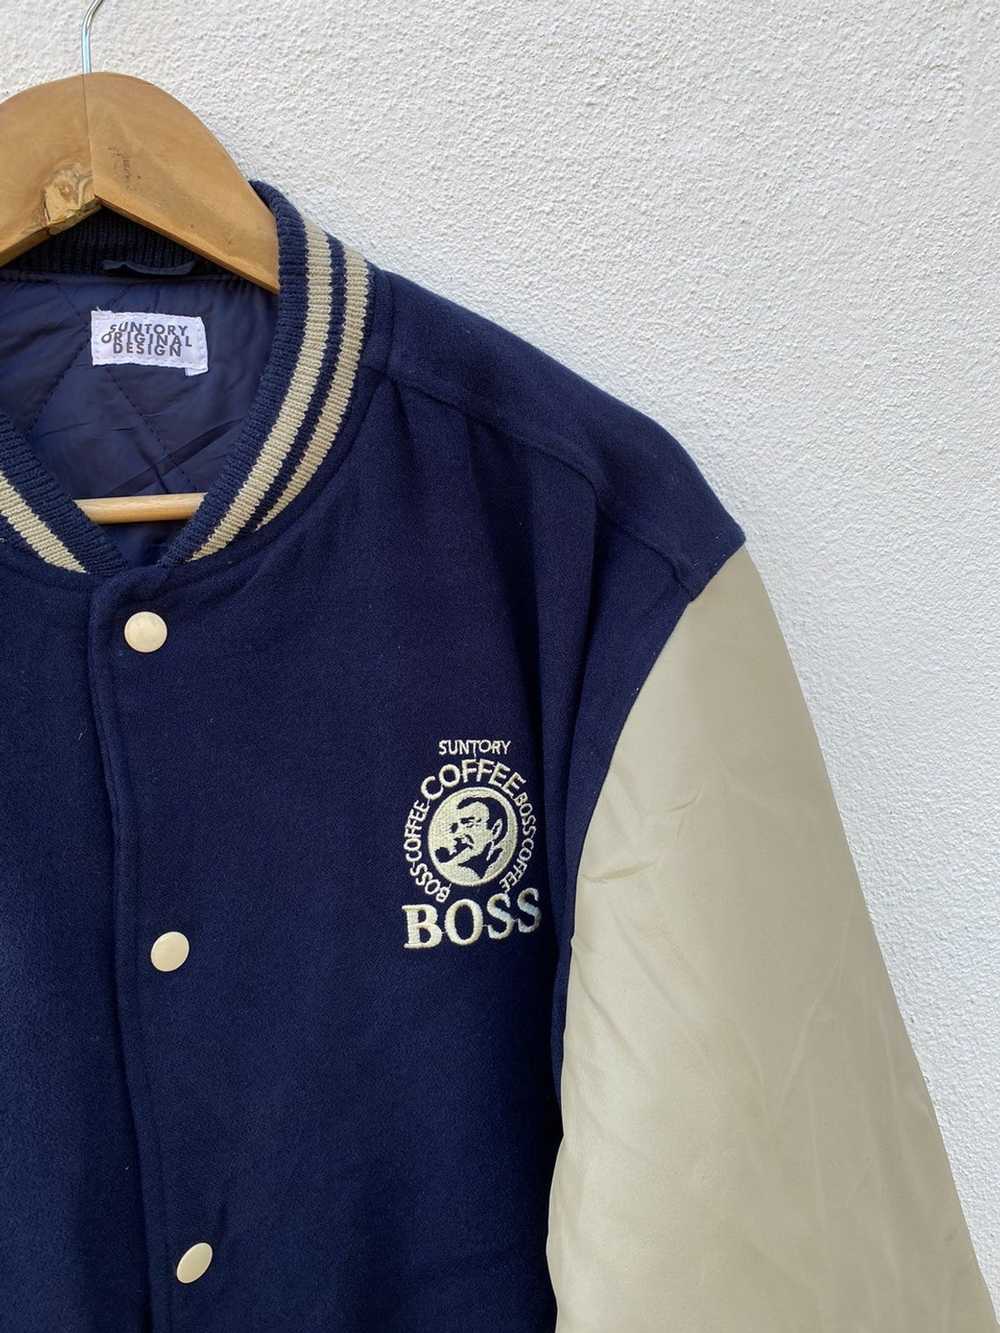 Varsity Jacket Suntory boss coffee varsity jacket - image 11